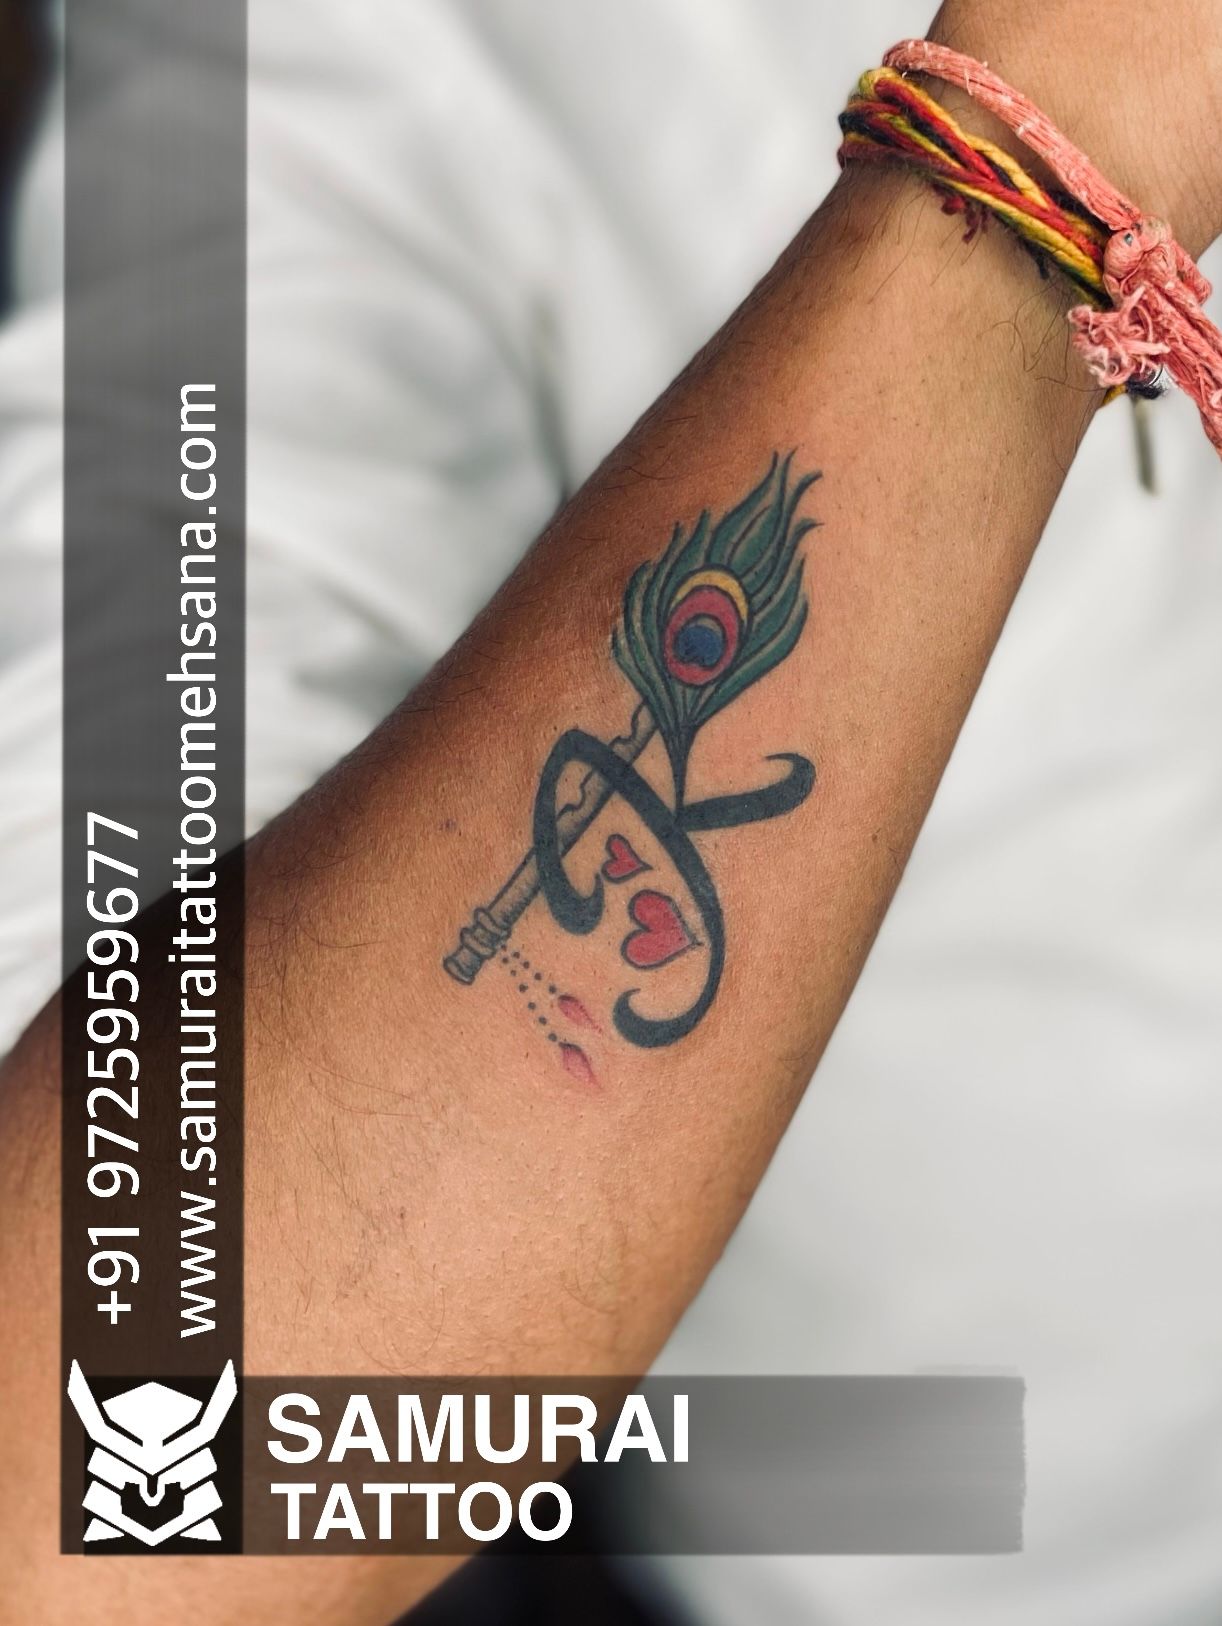 S+M+K heart (Union) heartigram s+m+k original tribal tattoo design